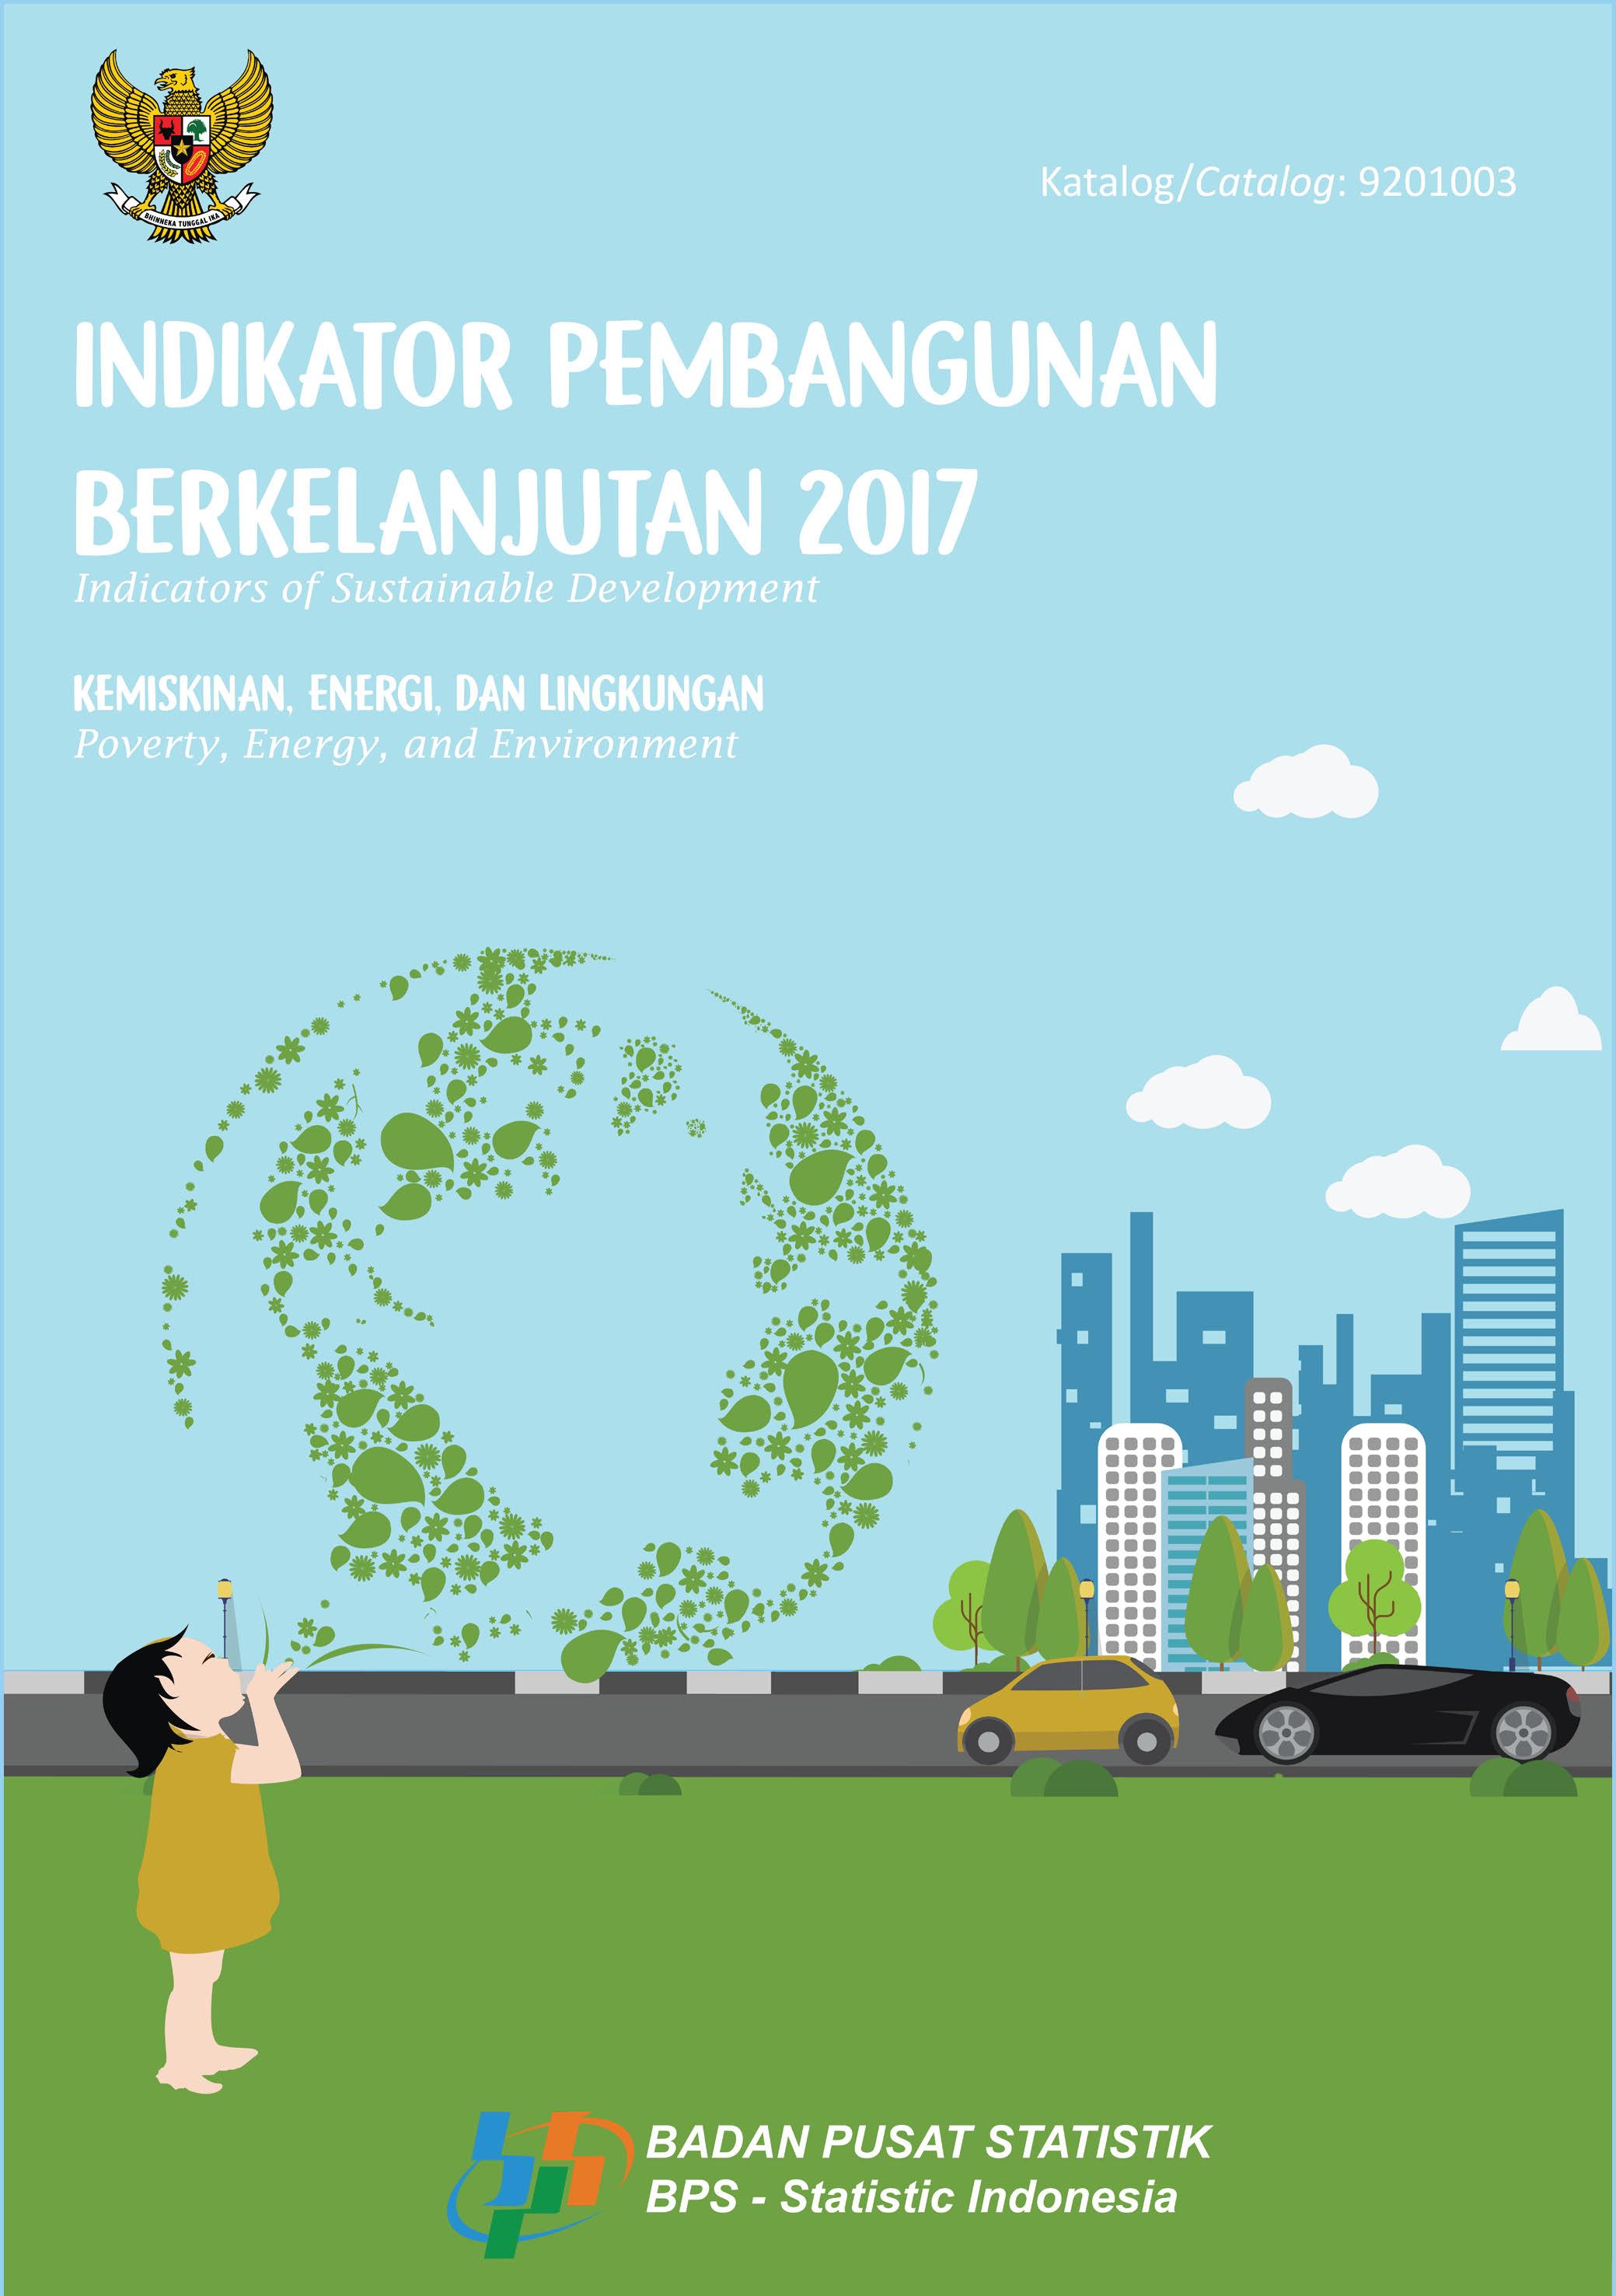 Sustainable Development Indicators 2017